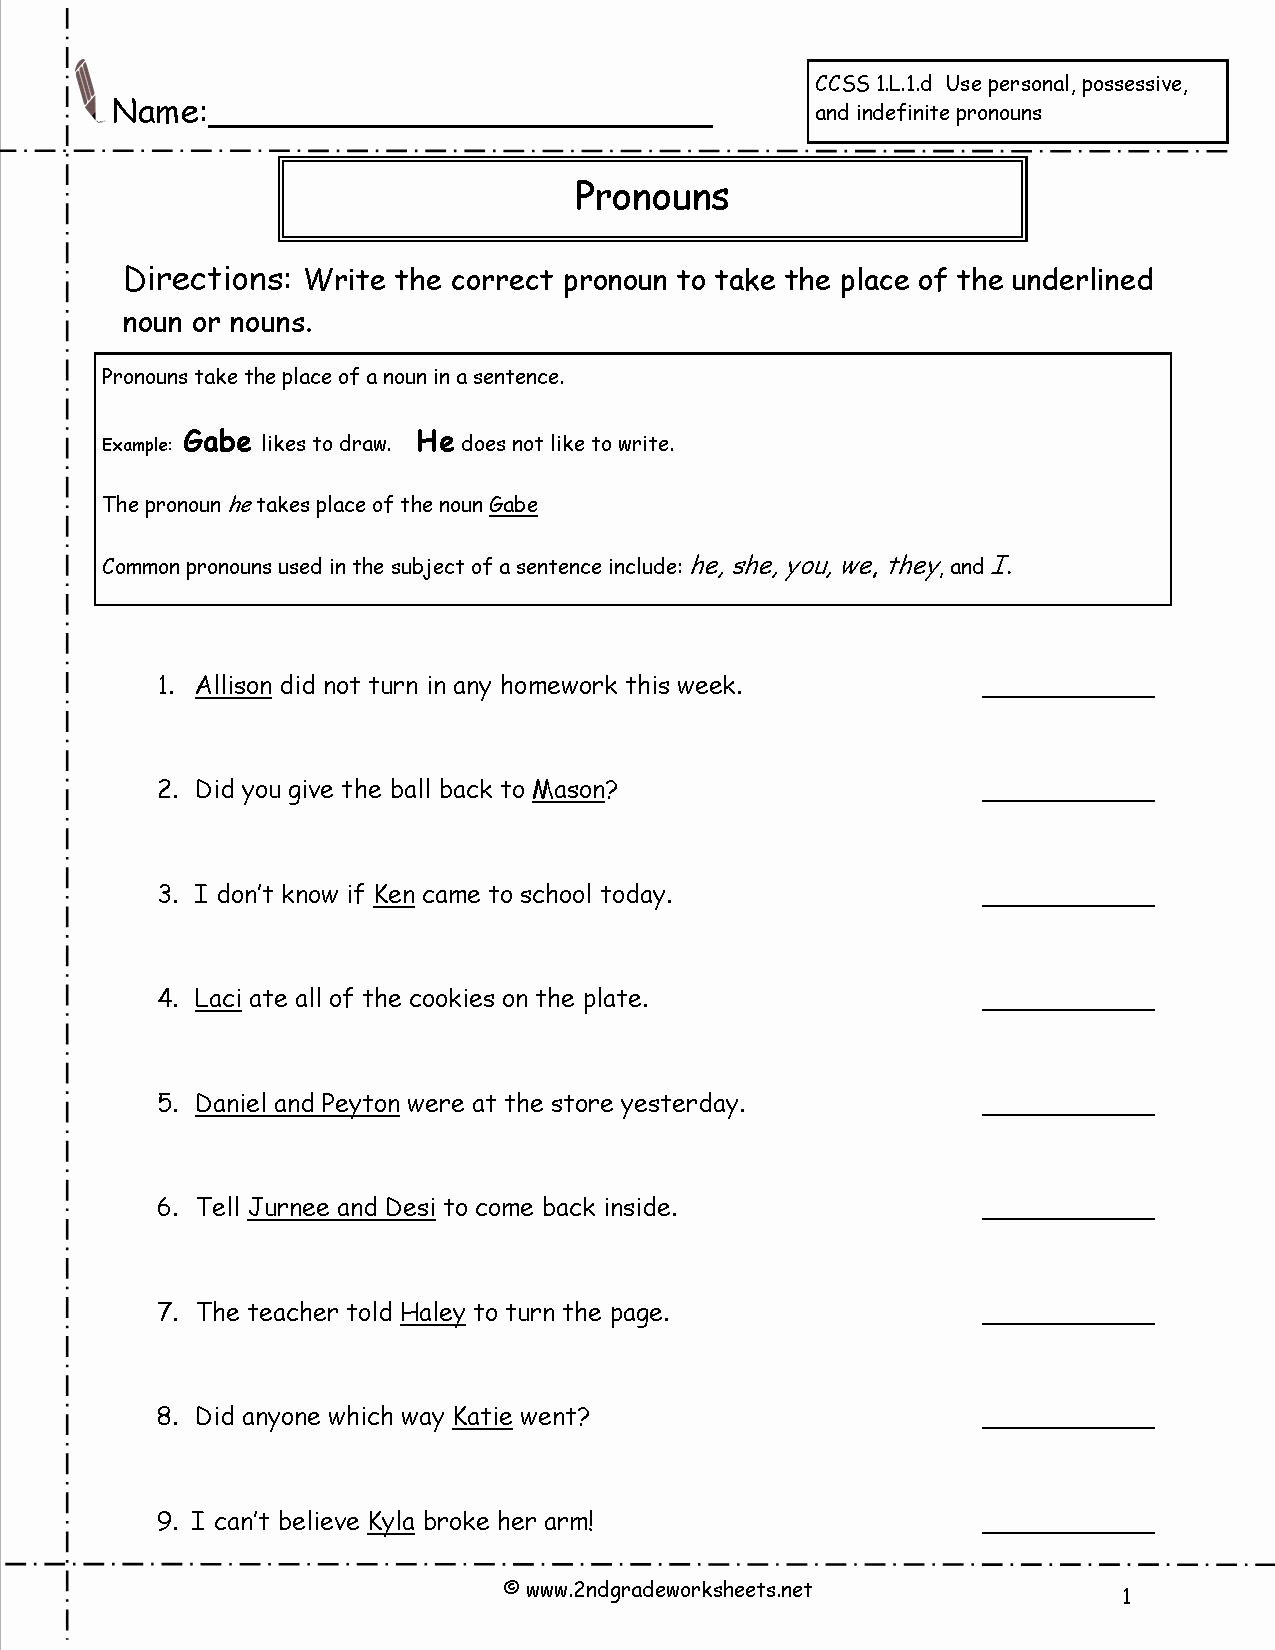 Possessive Pronouns Worksheet 2nd Grade Luxury 15 Best Of Proper Pronouns Worksheets 2nd Grade